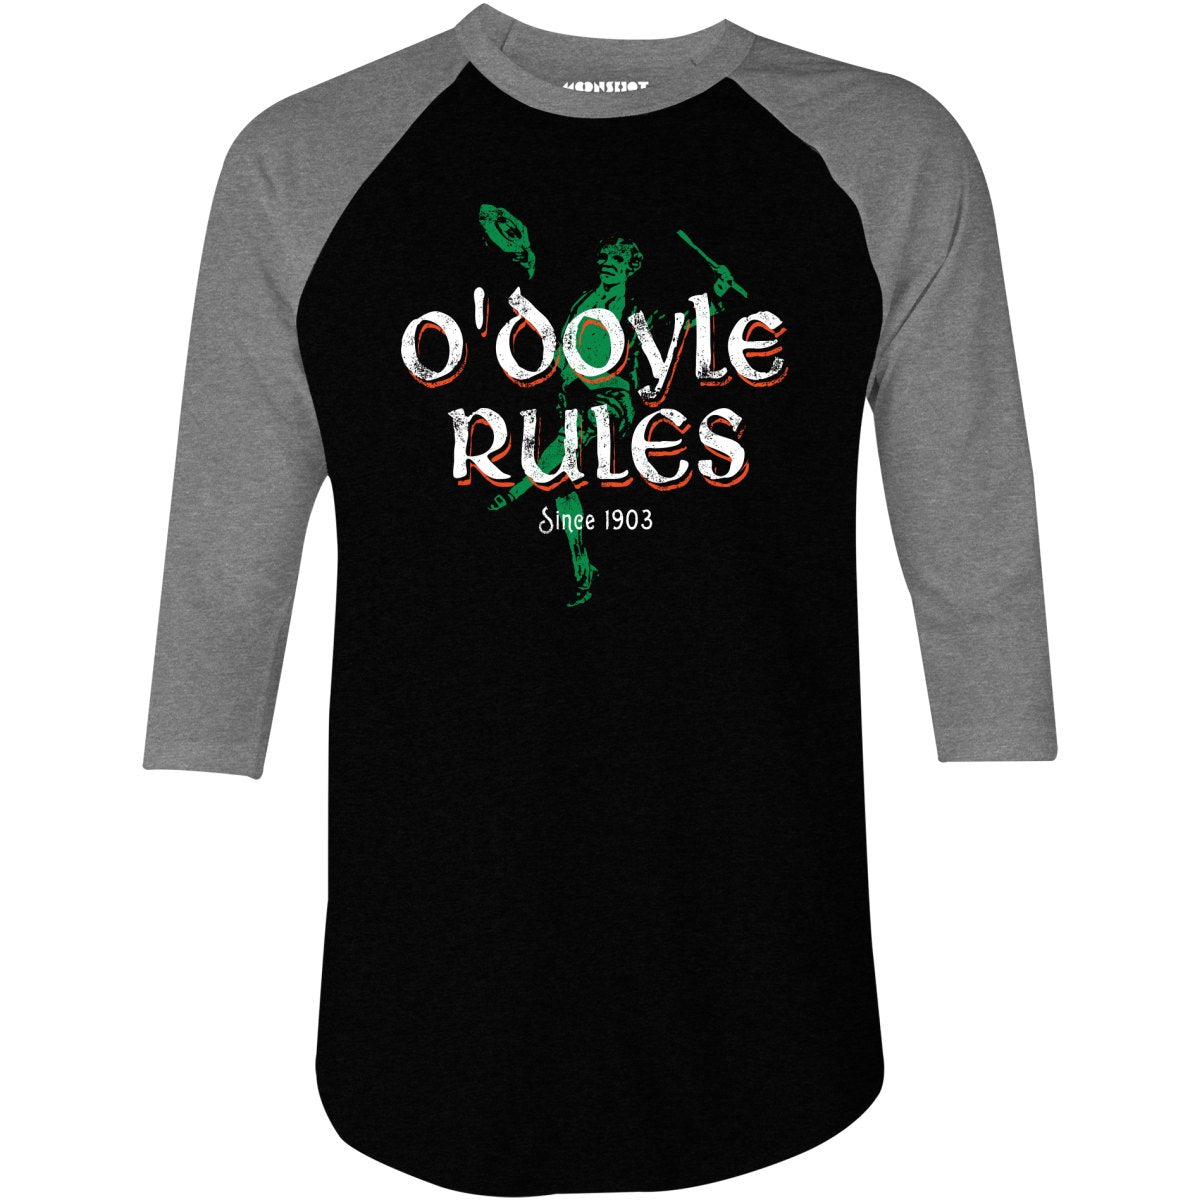 O'Doyle Rules - 3/4 Sleeve Raglan T-Shirt